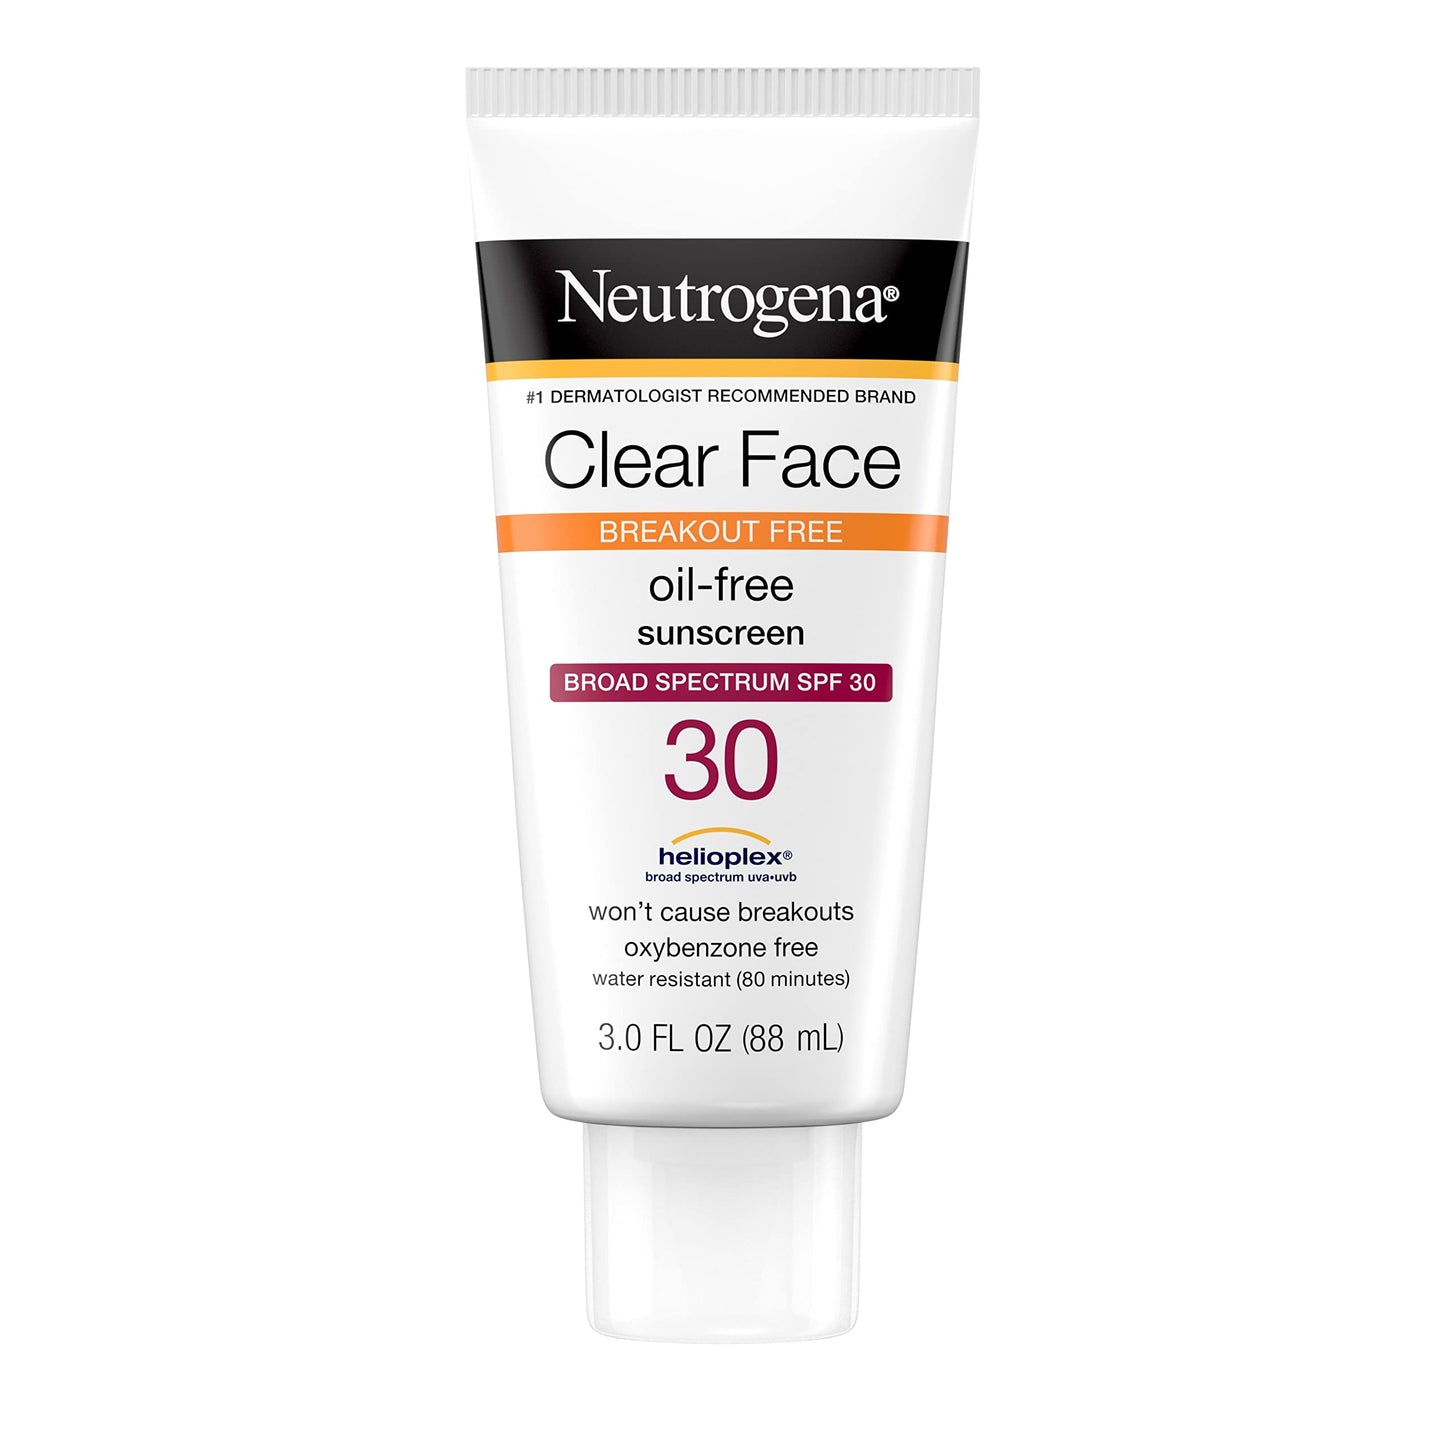 Neutrogena Clear Face Oil-free Sunscreen SPF 30